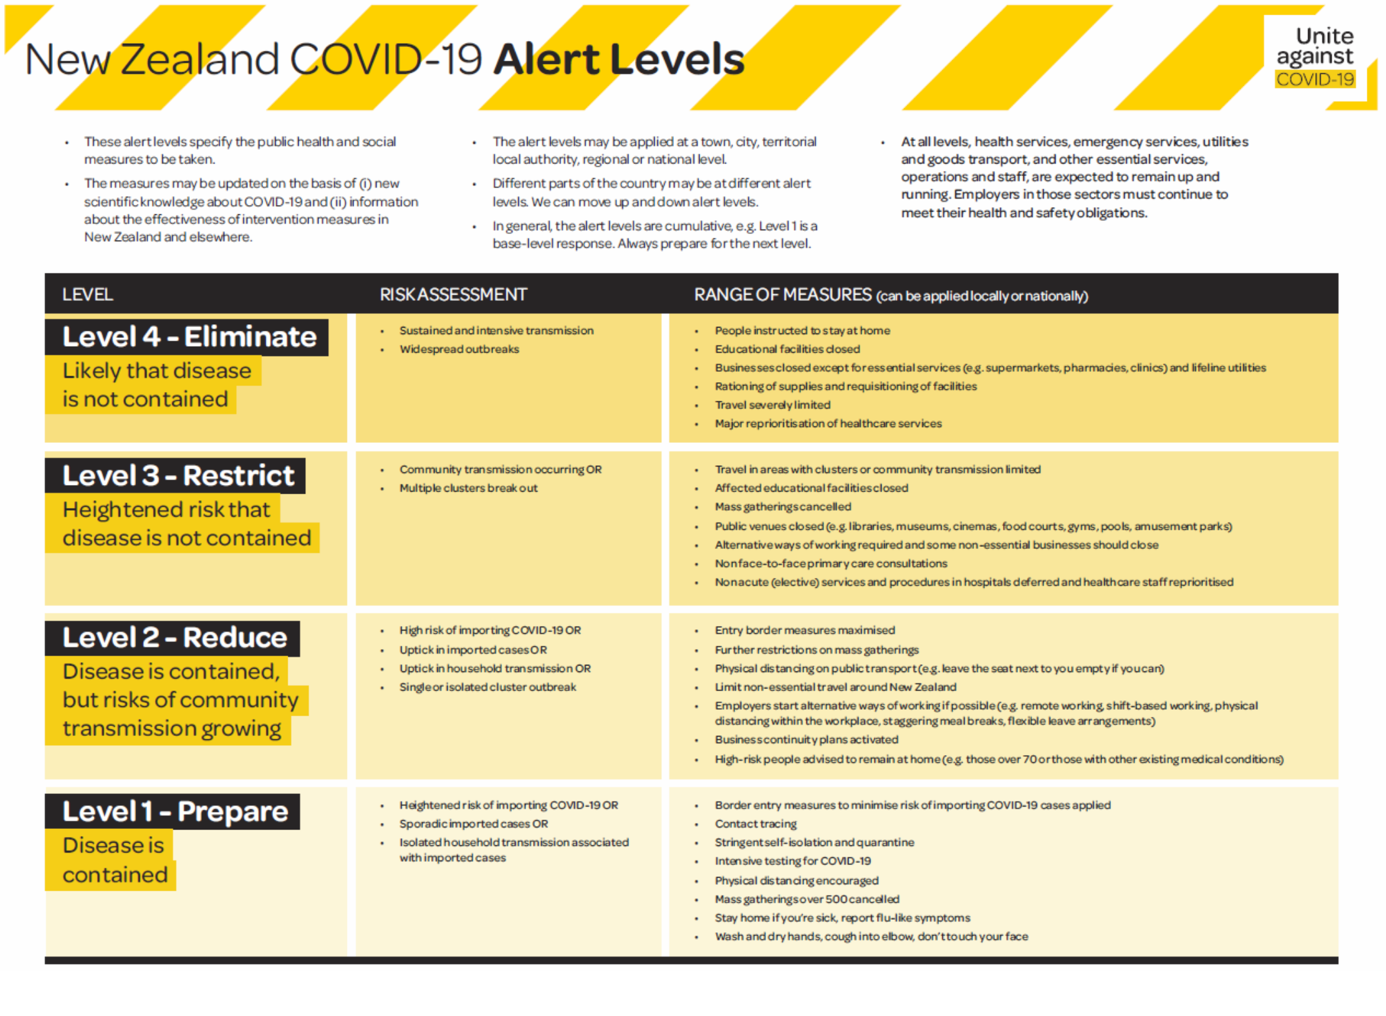 NZ COVID-19 Alert Levels Information